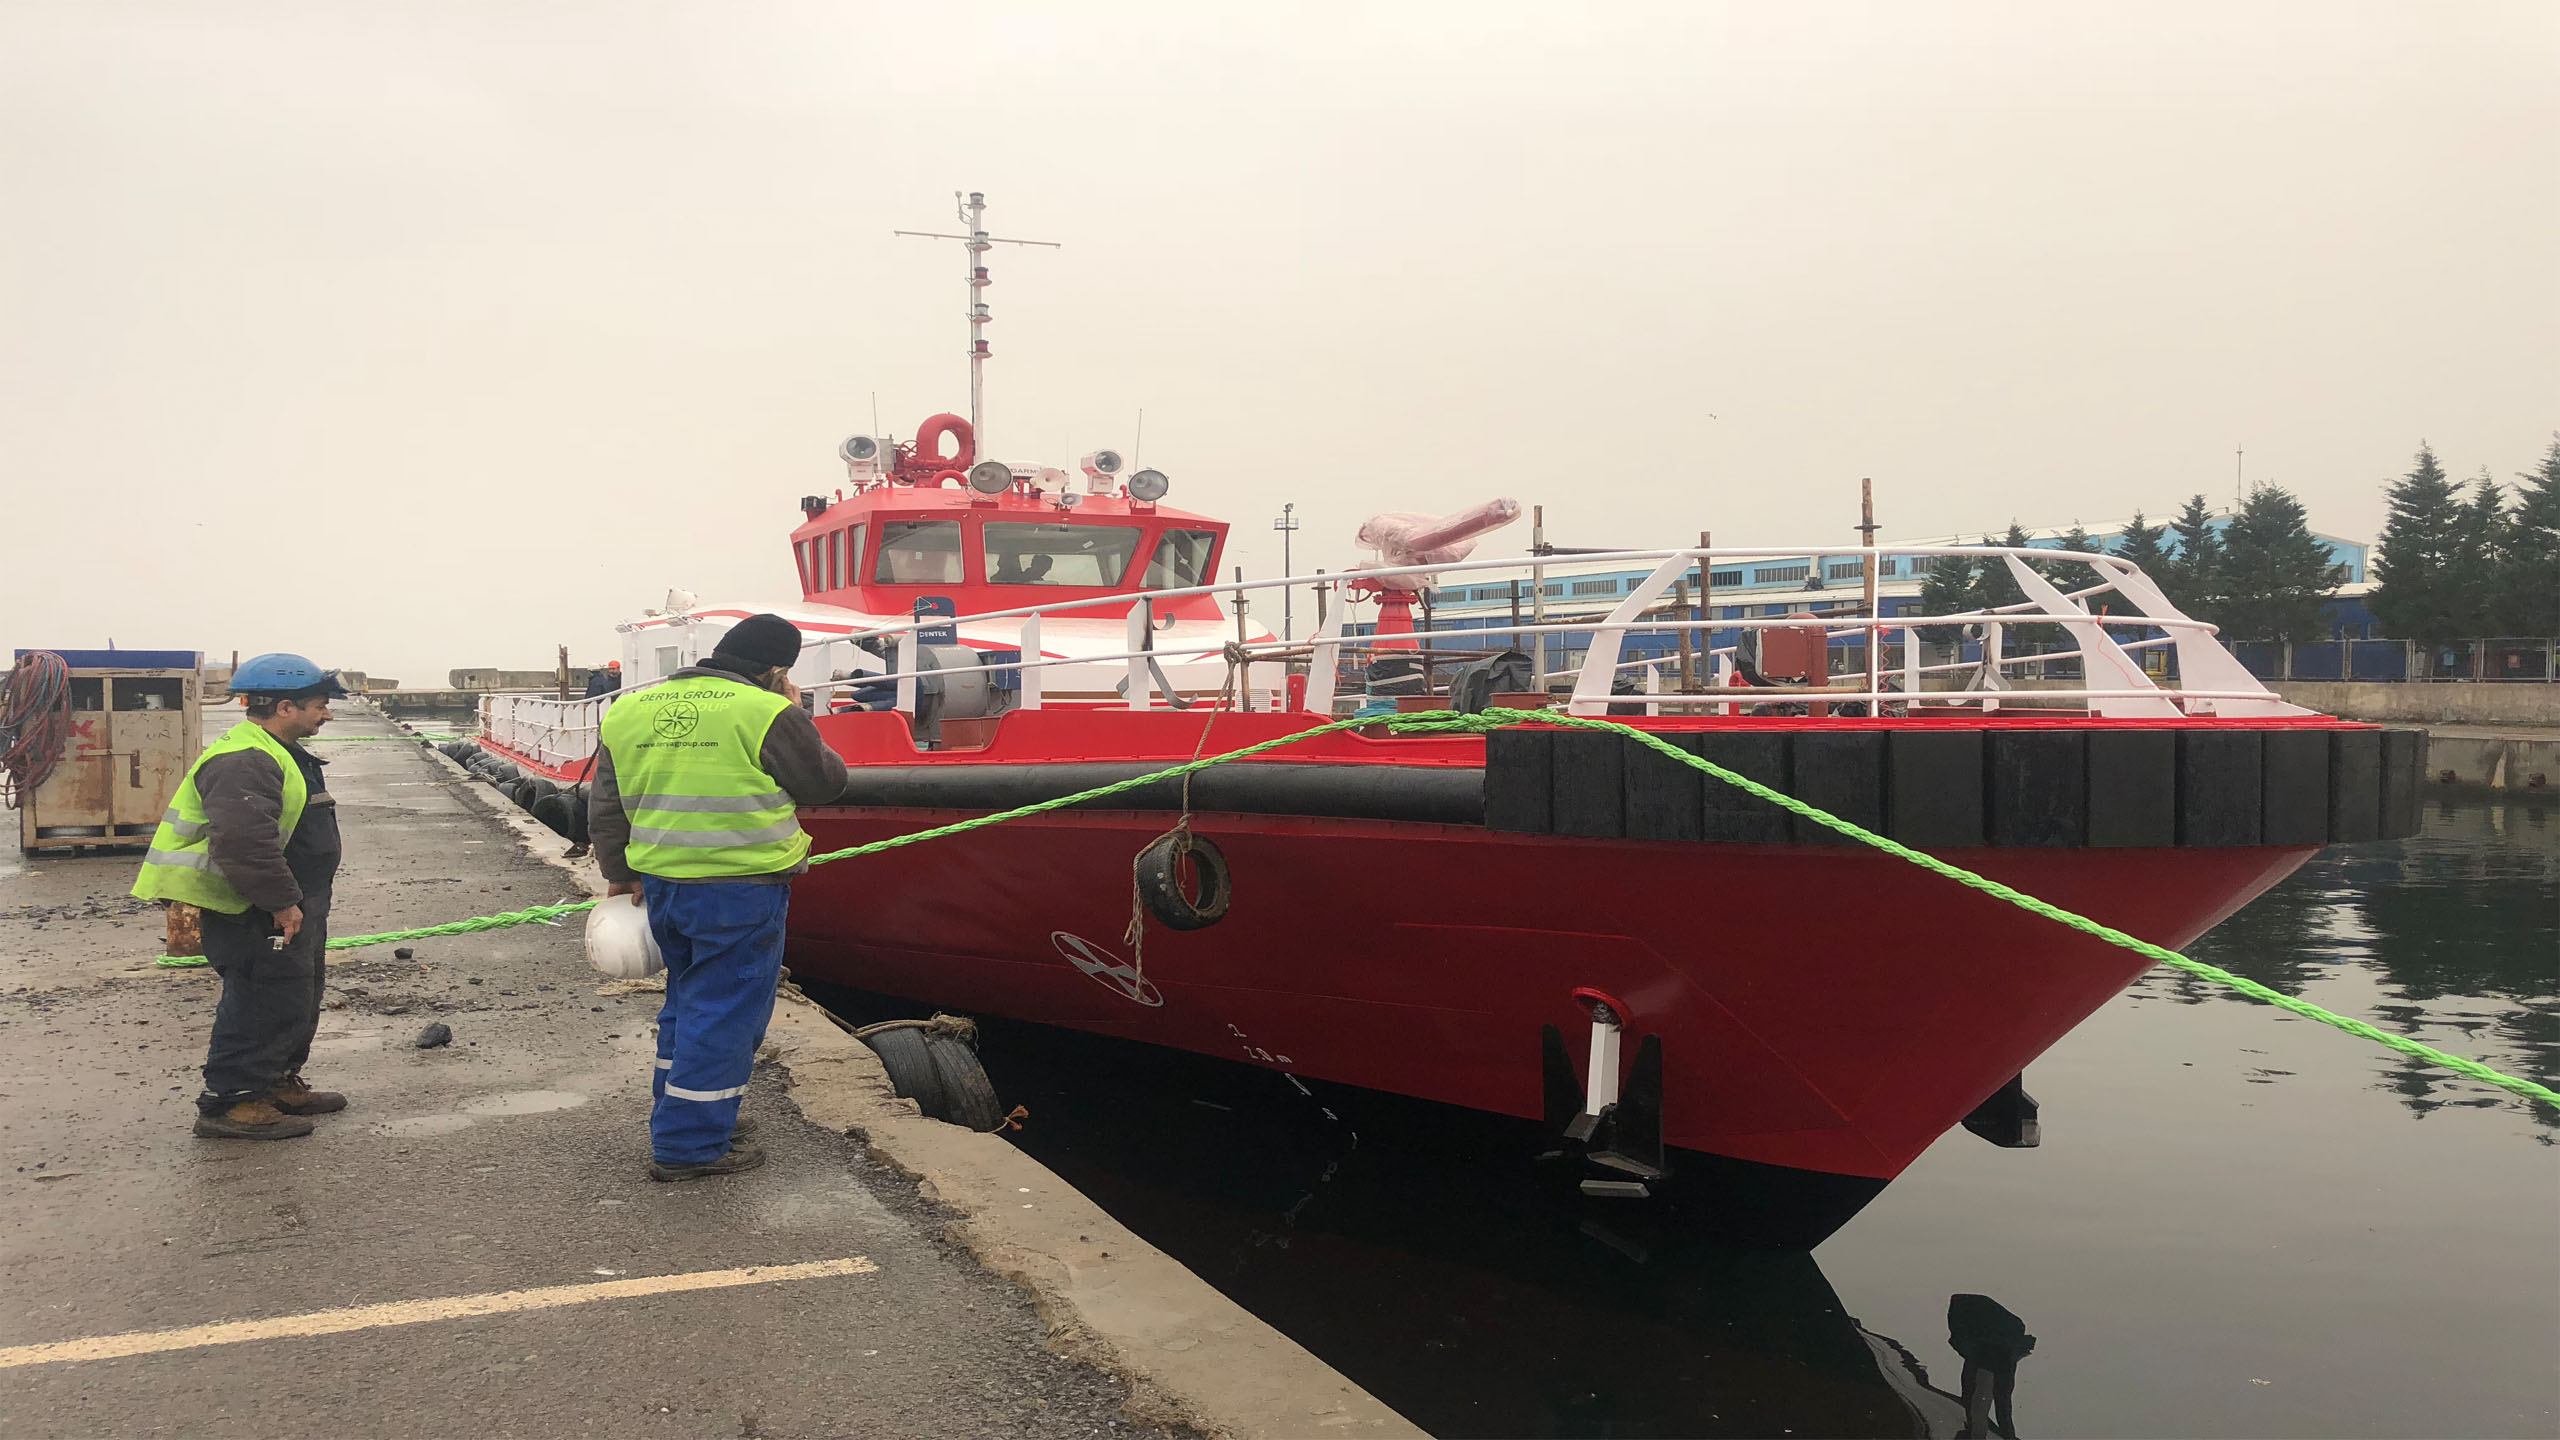 International Turkmenbashi Harbor Project – Fire Fighting Ship Project